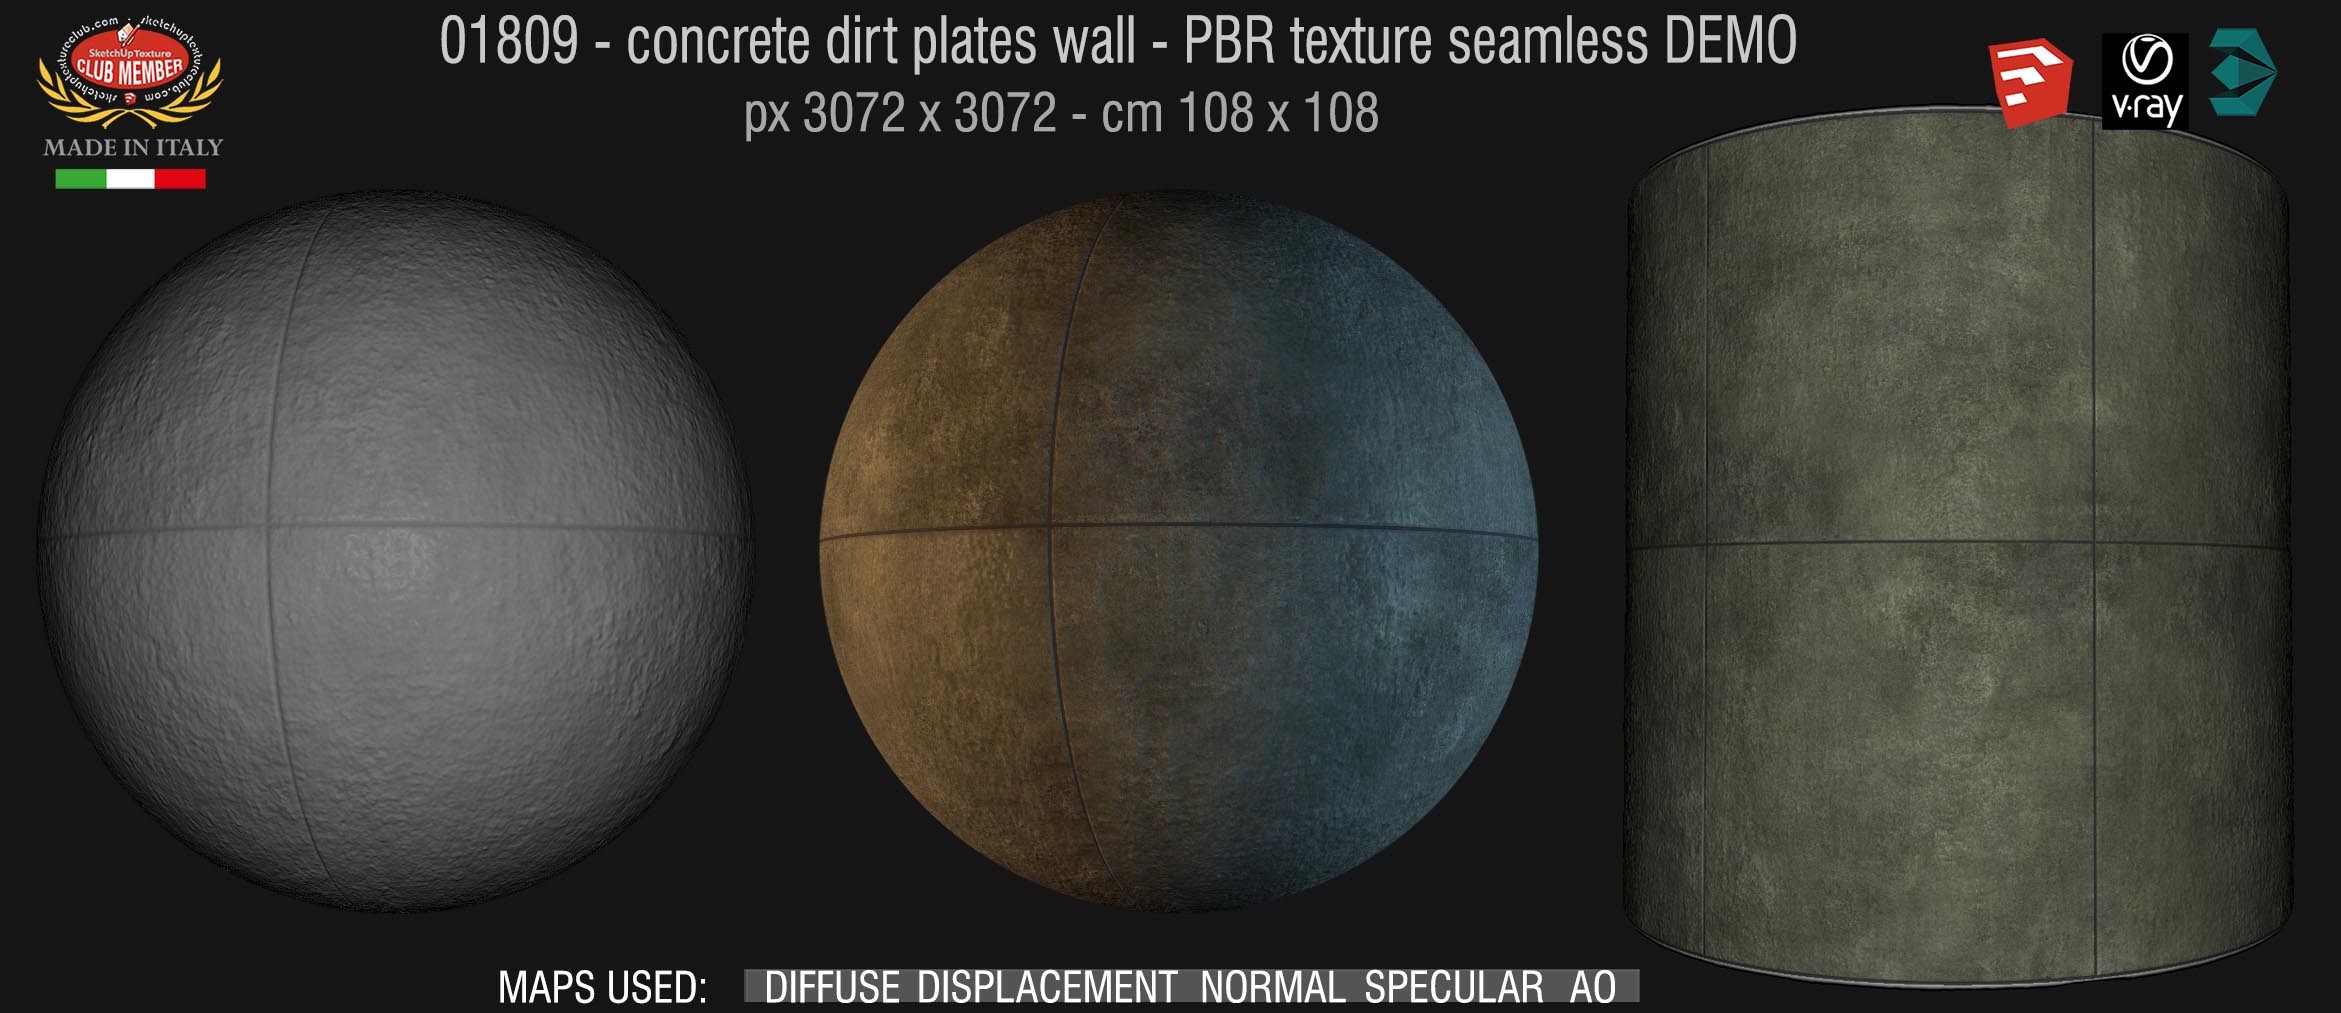 01809 Concrete dirt plates wall PBR texture seamless + maps DEMO